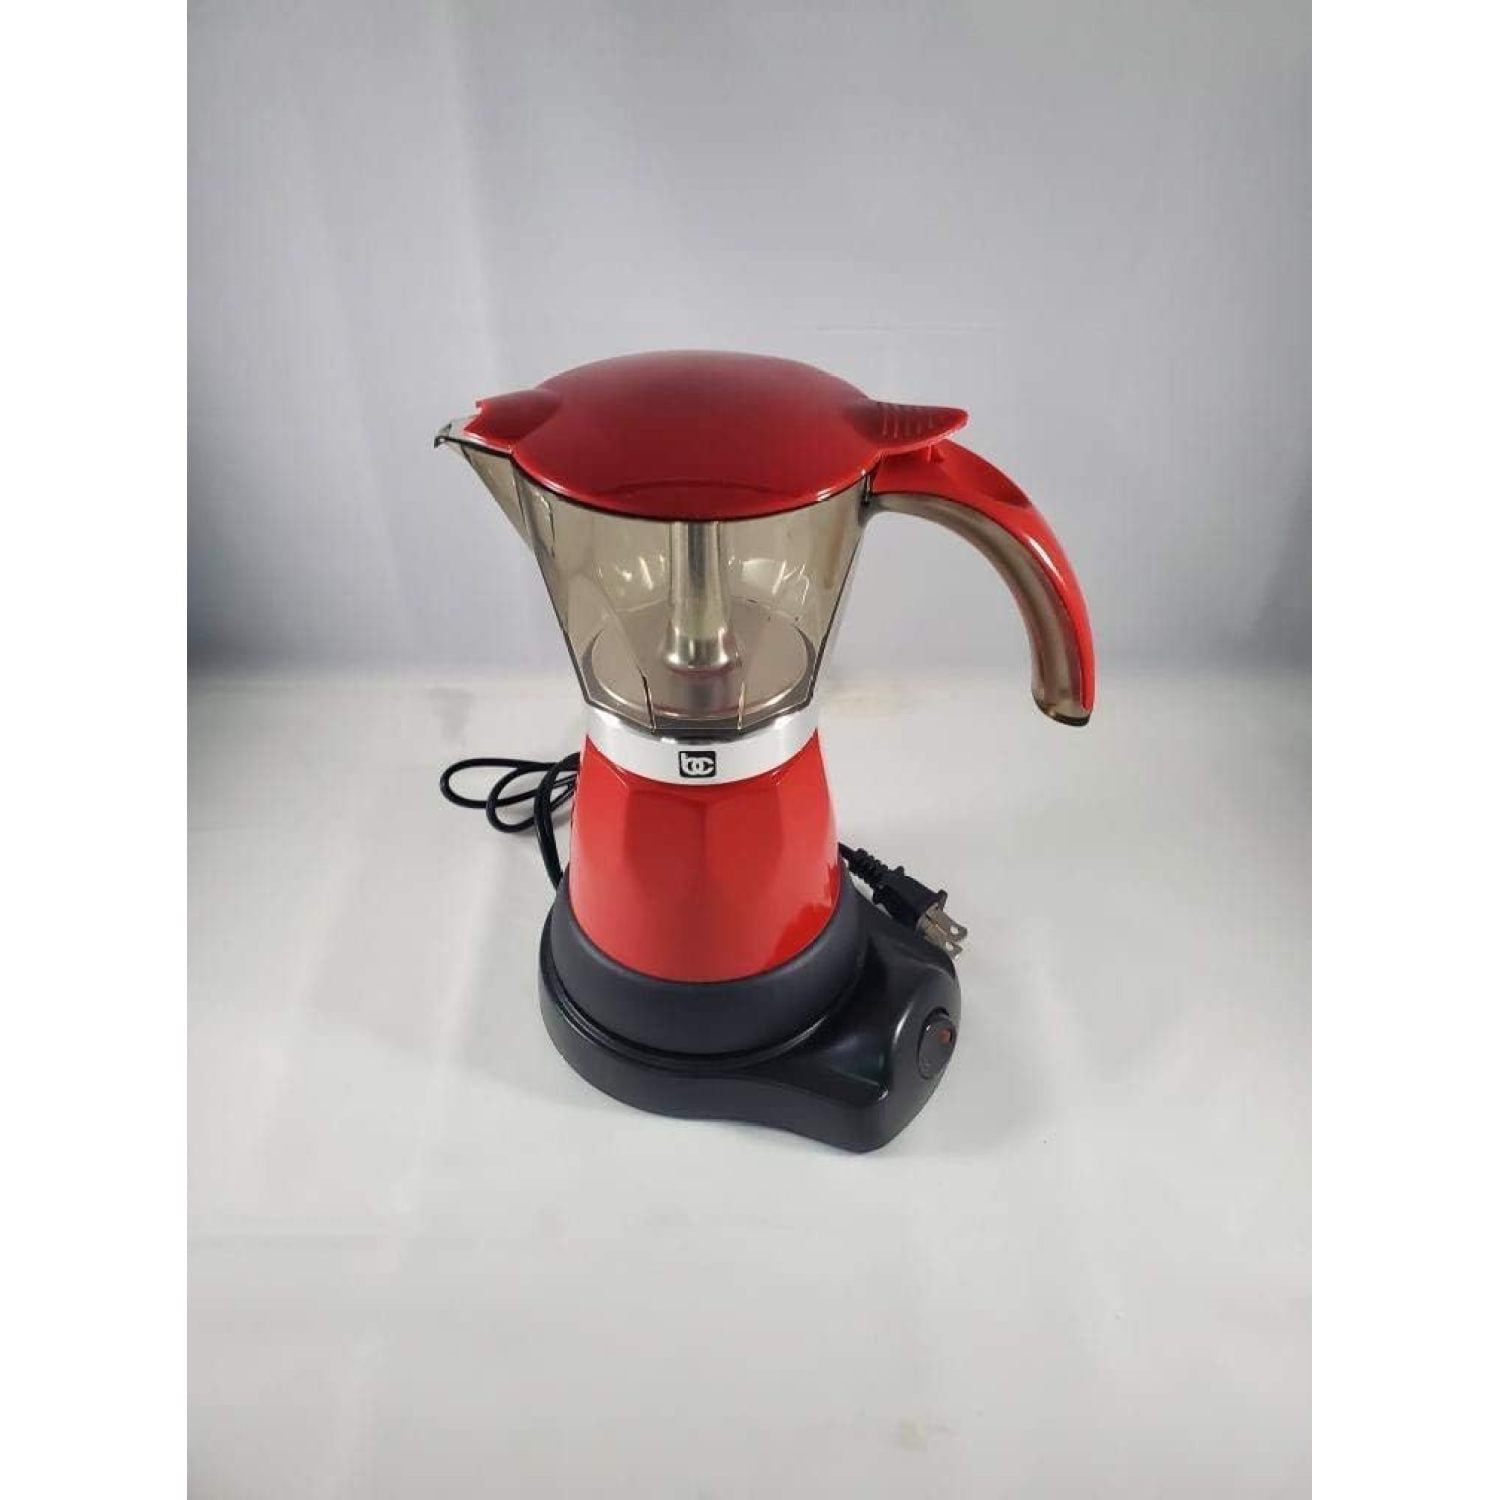 Portable Espresso Coffee Maker. Cafetera Elctrica Portable